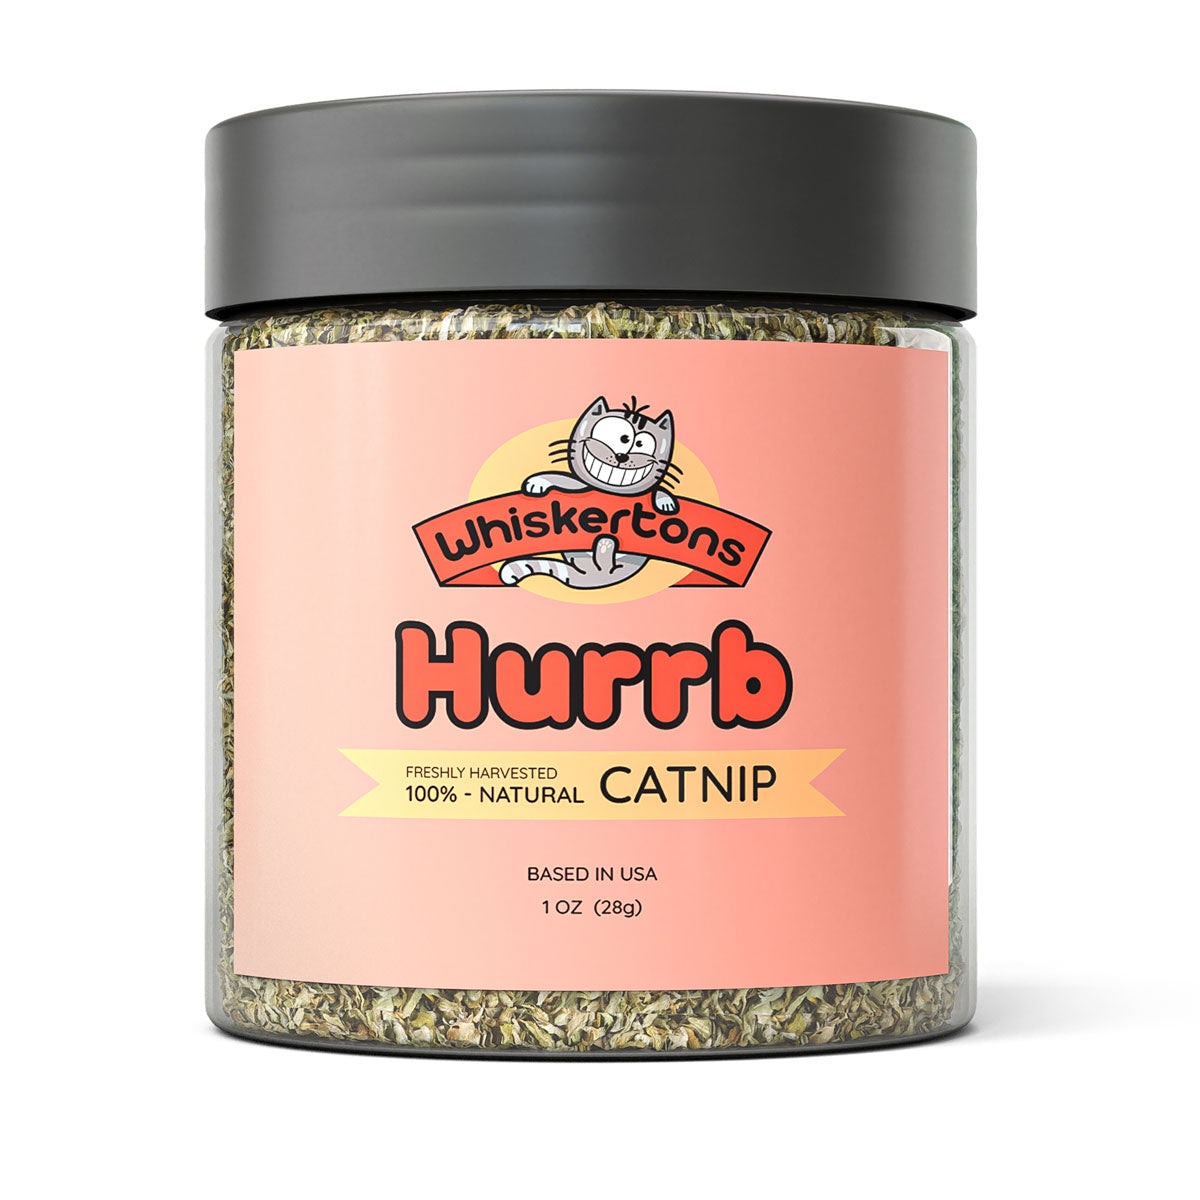 Hurrb Catnip